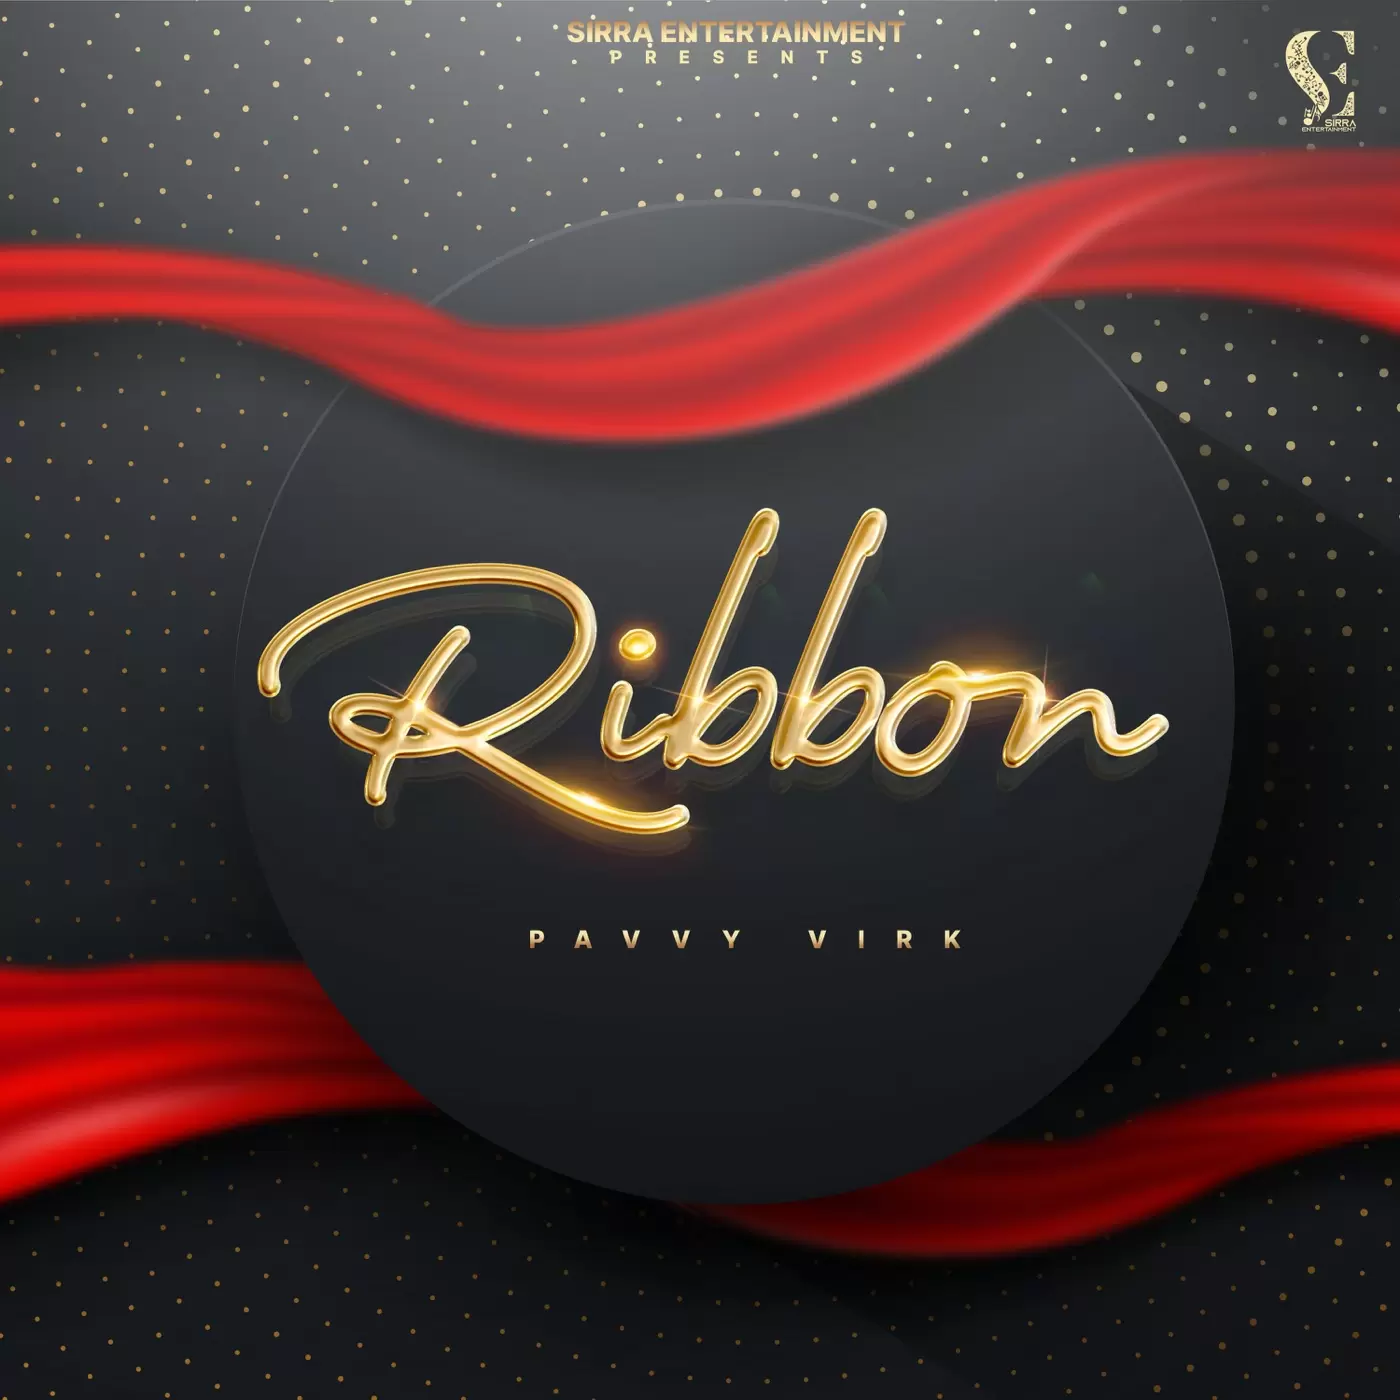 Ribbon Pavvy Virk Mp3 Download Song - Mr-Punjab